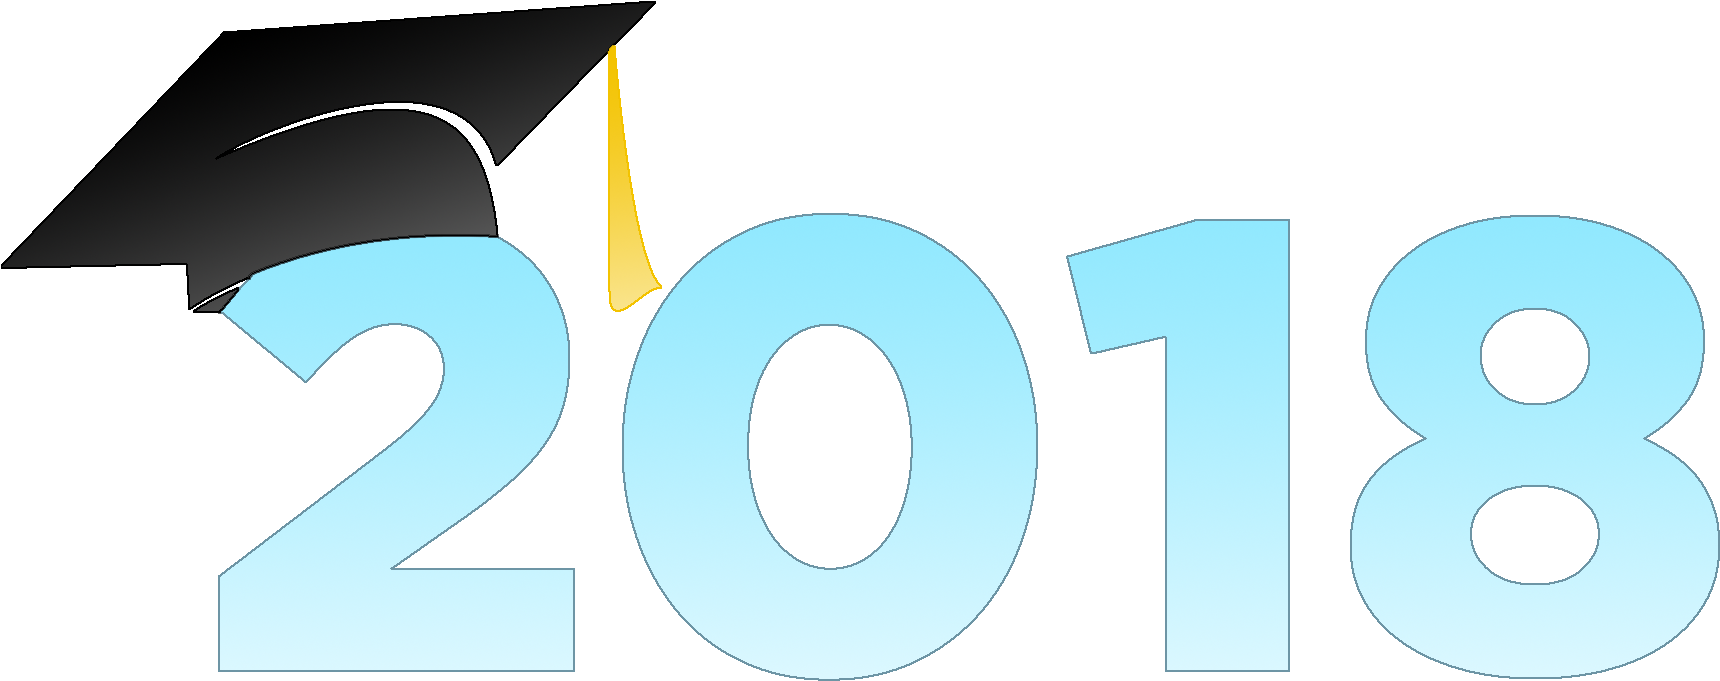 Graduation Ceremony Square Academic Cap Academic Dress - 2018 With Graduation Cap (1735x784)